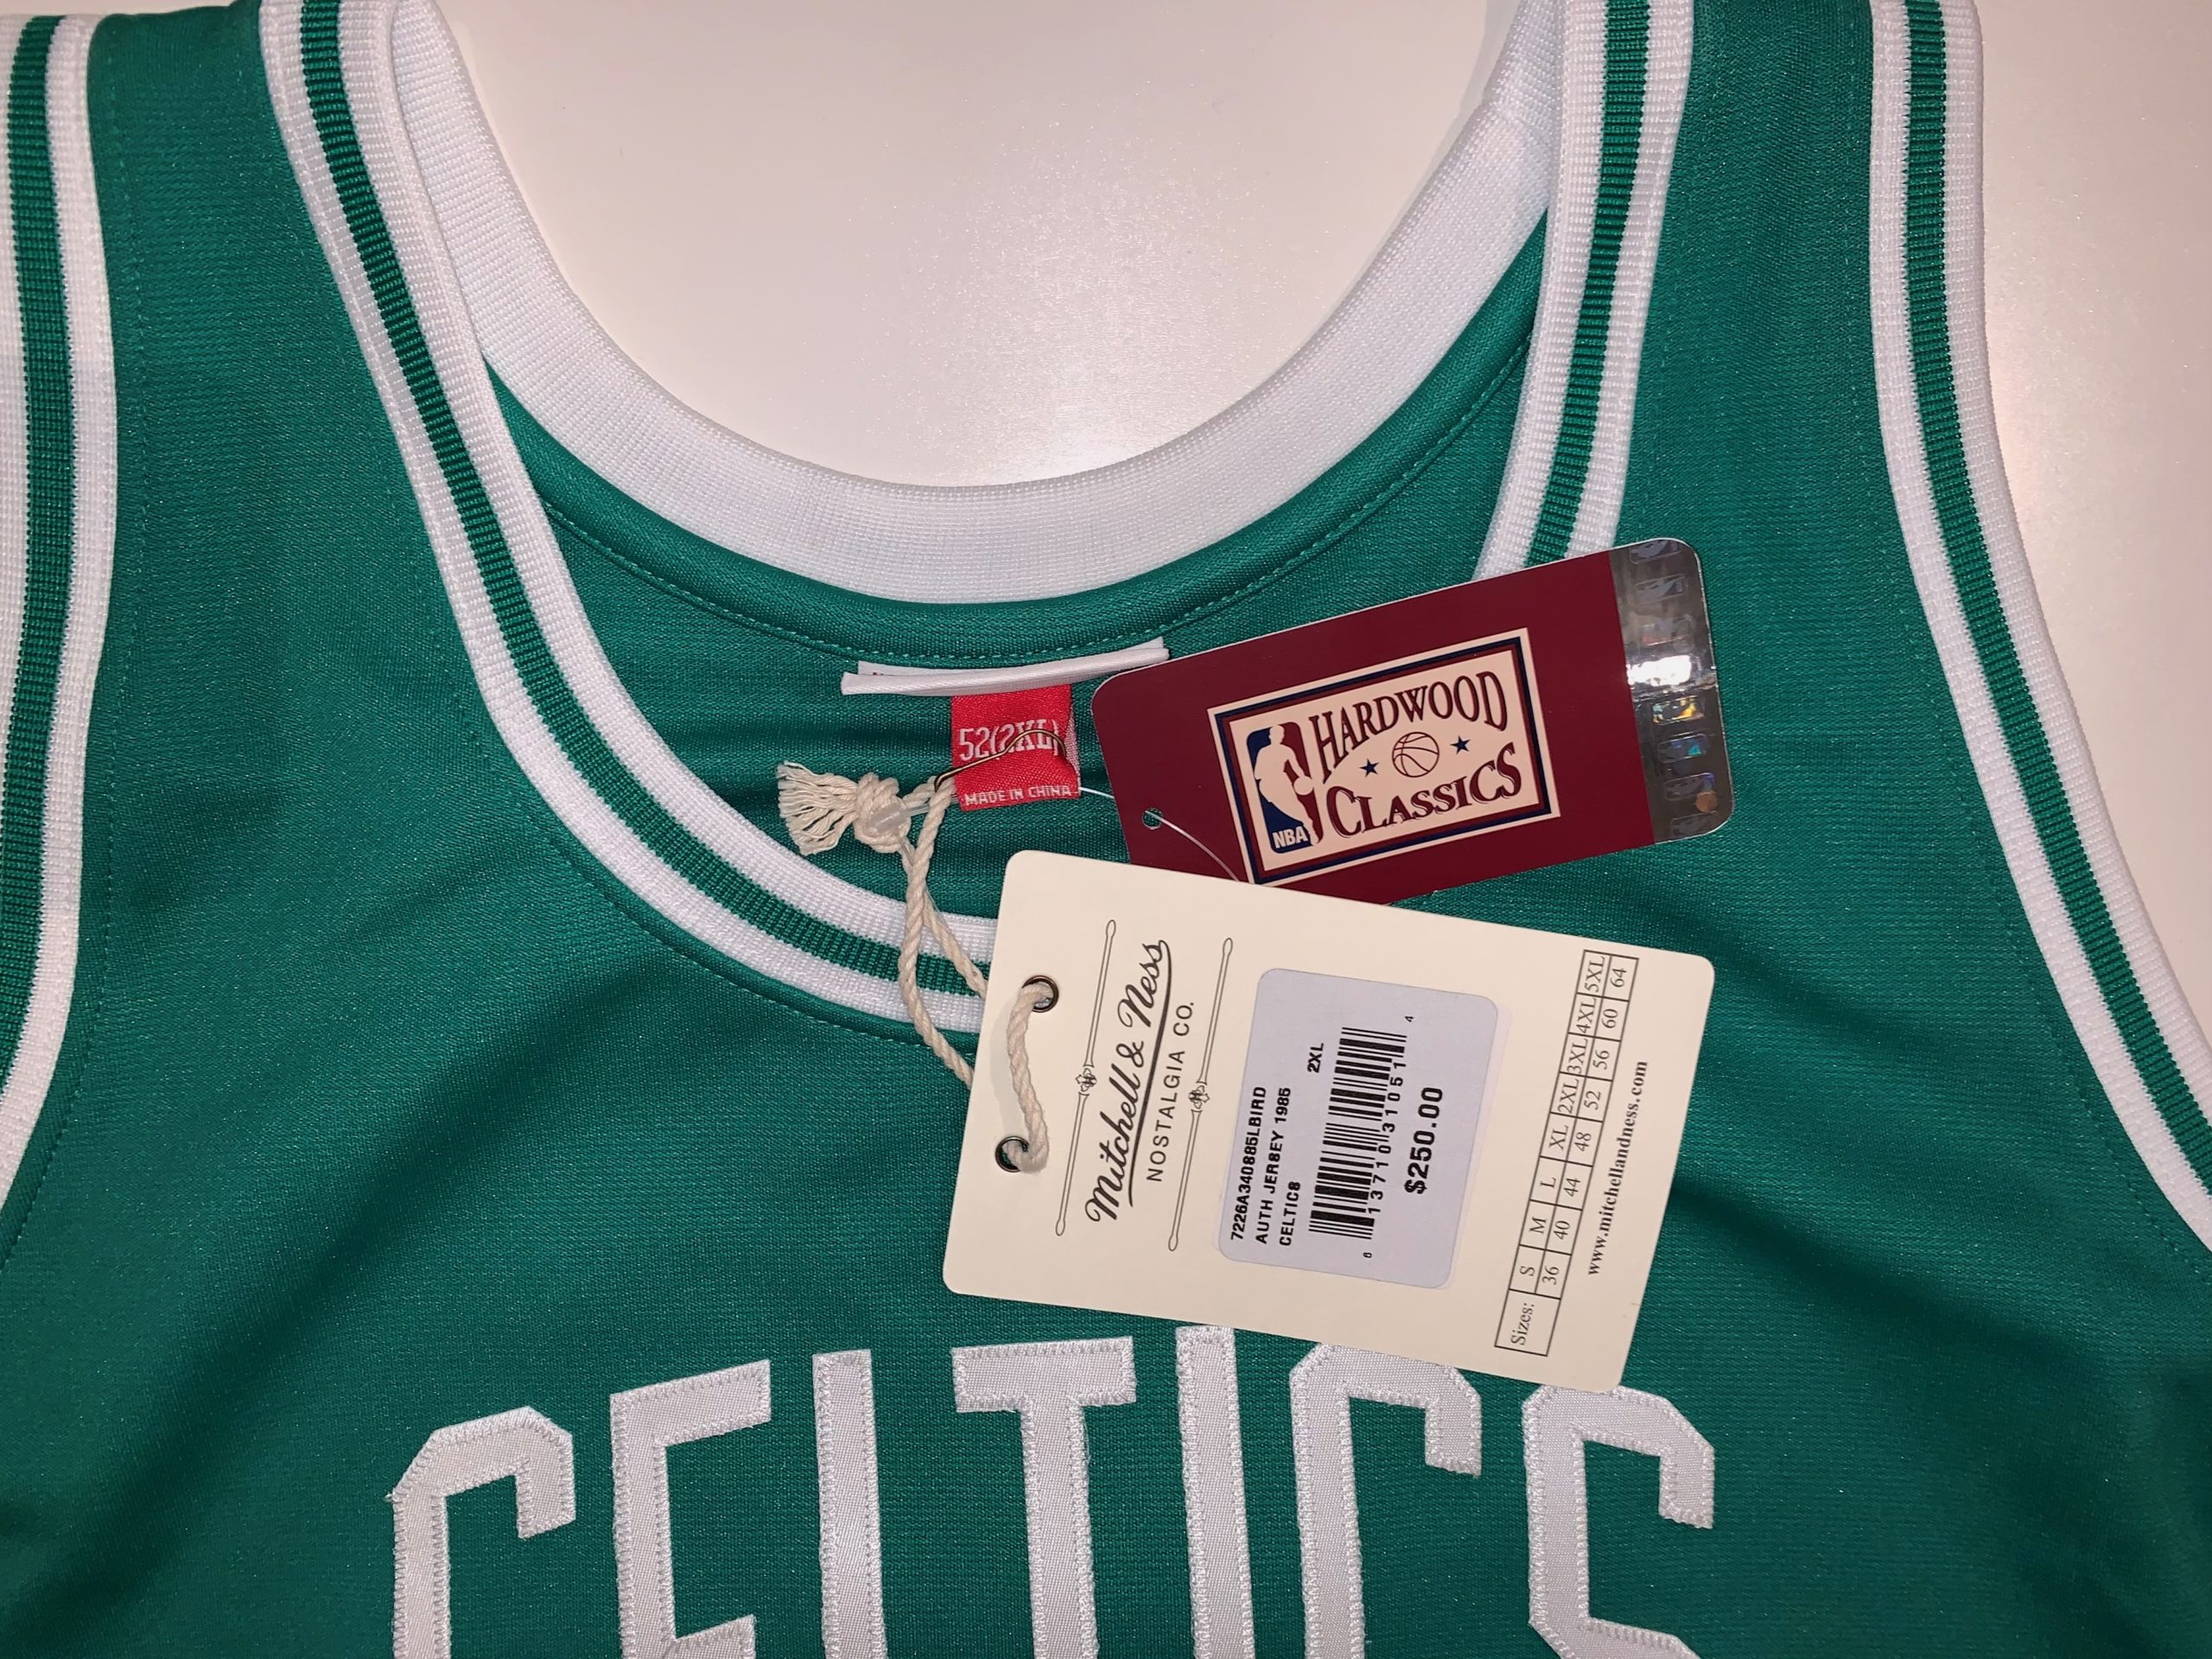 Mitchell & Ness Larry Bird Boston Celtics Jersey Size XL Green